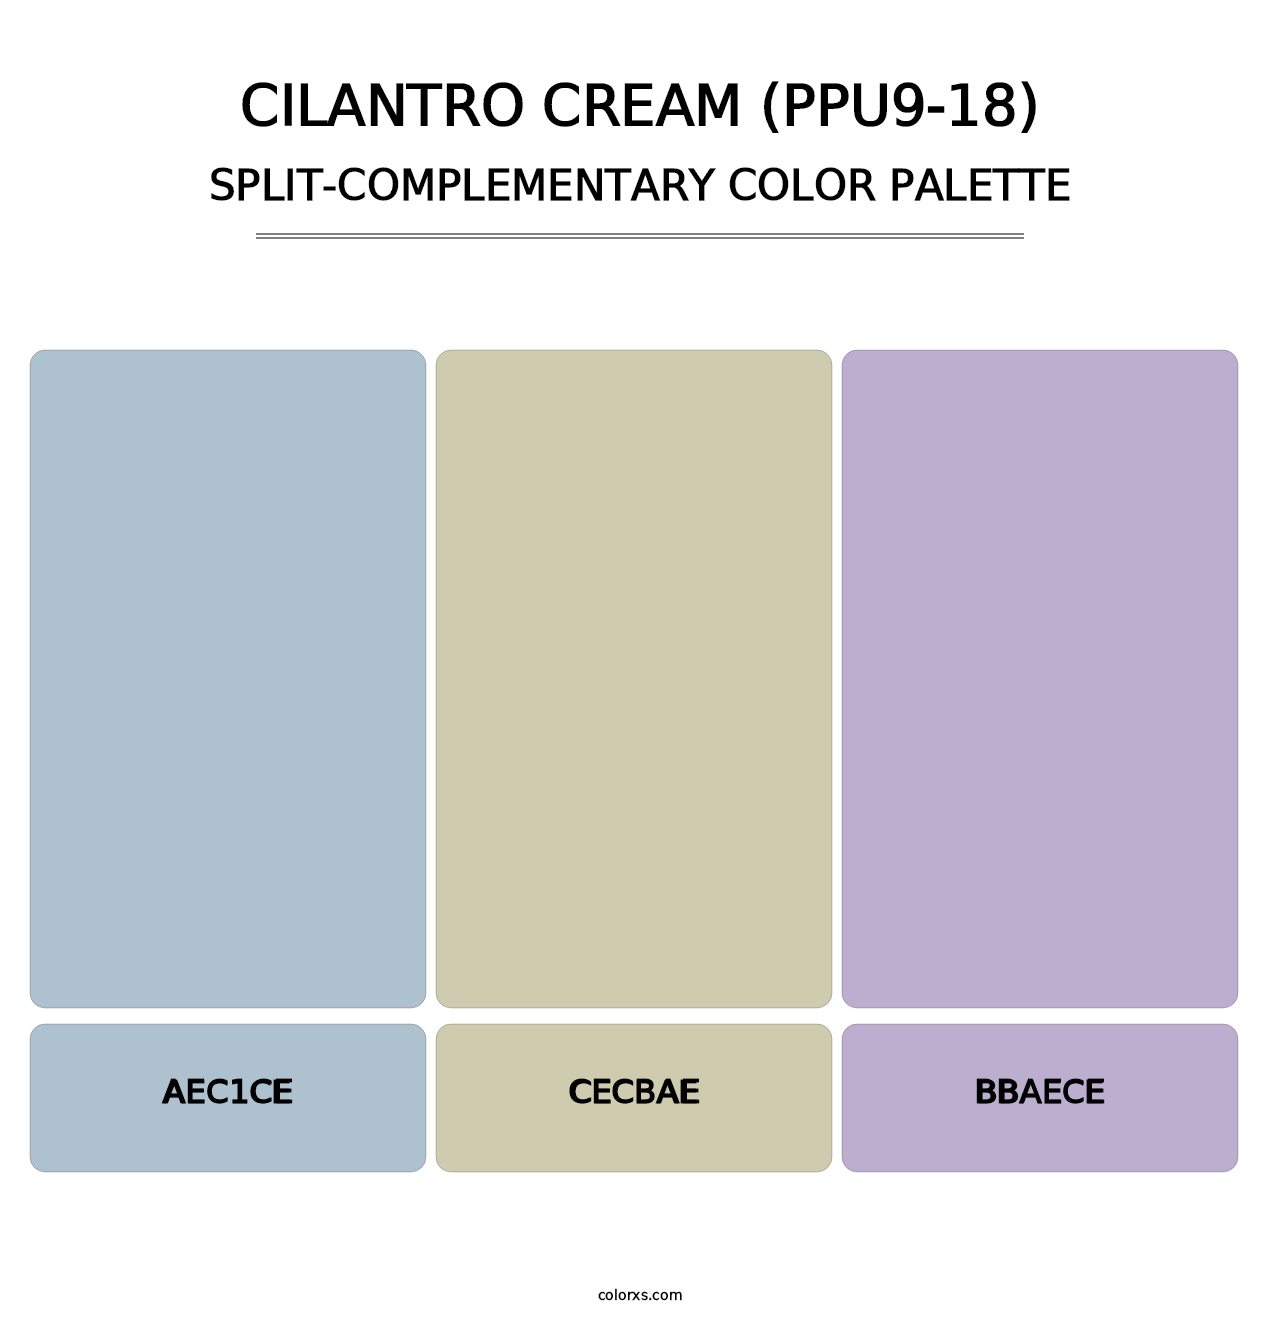 Cilantro Cream (PPU9-18) - Split-Complementary Color Palette